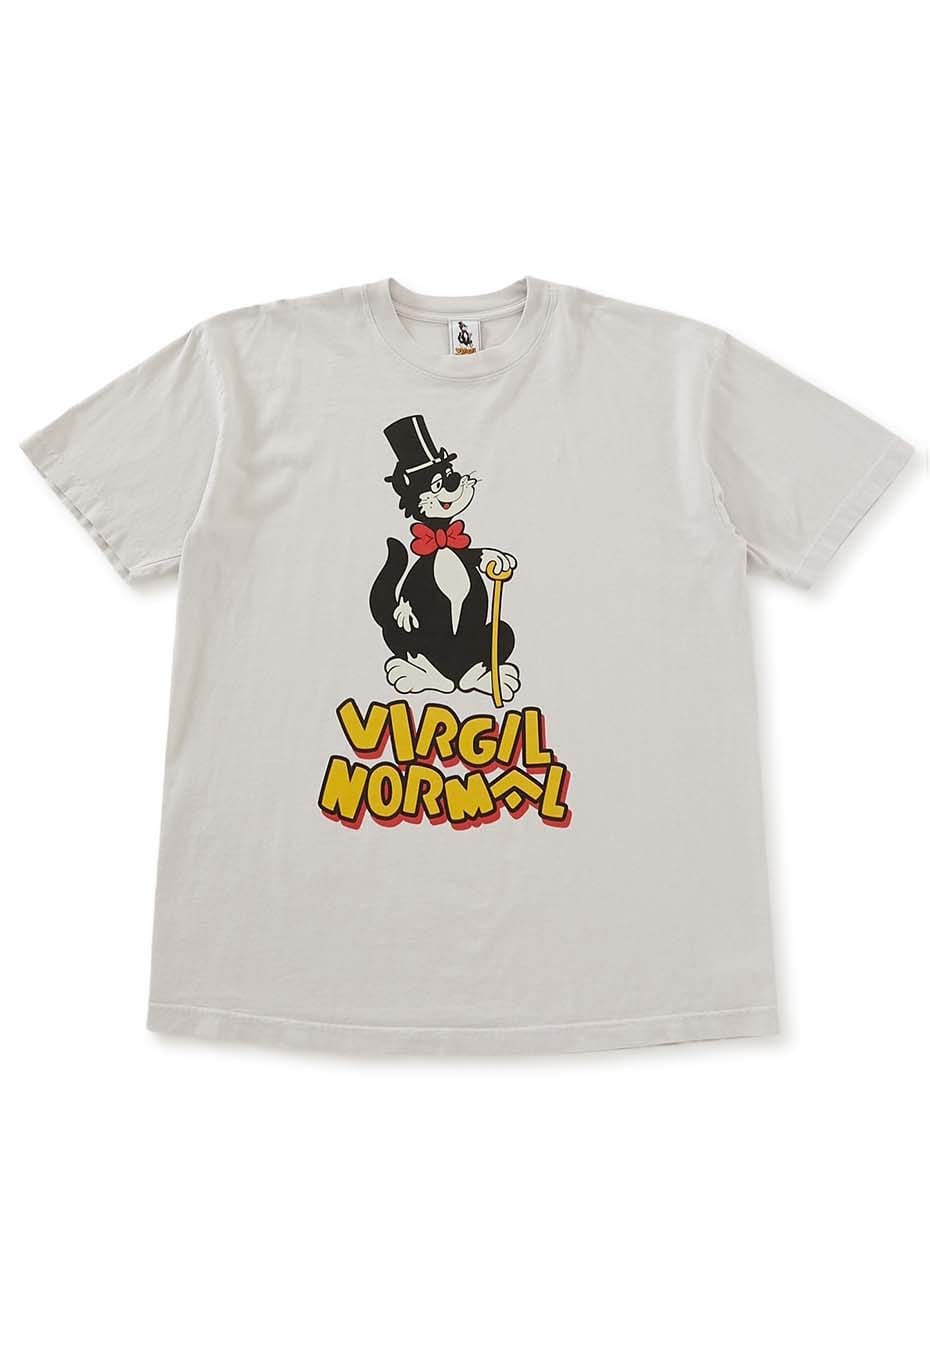 VIRGIL NORMAL Tシャツ